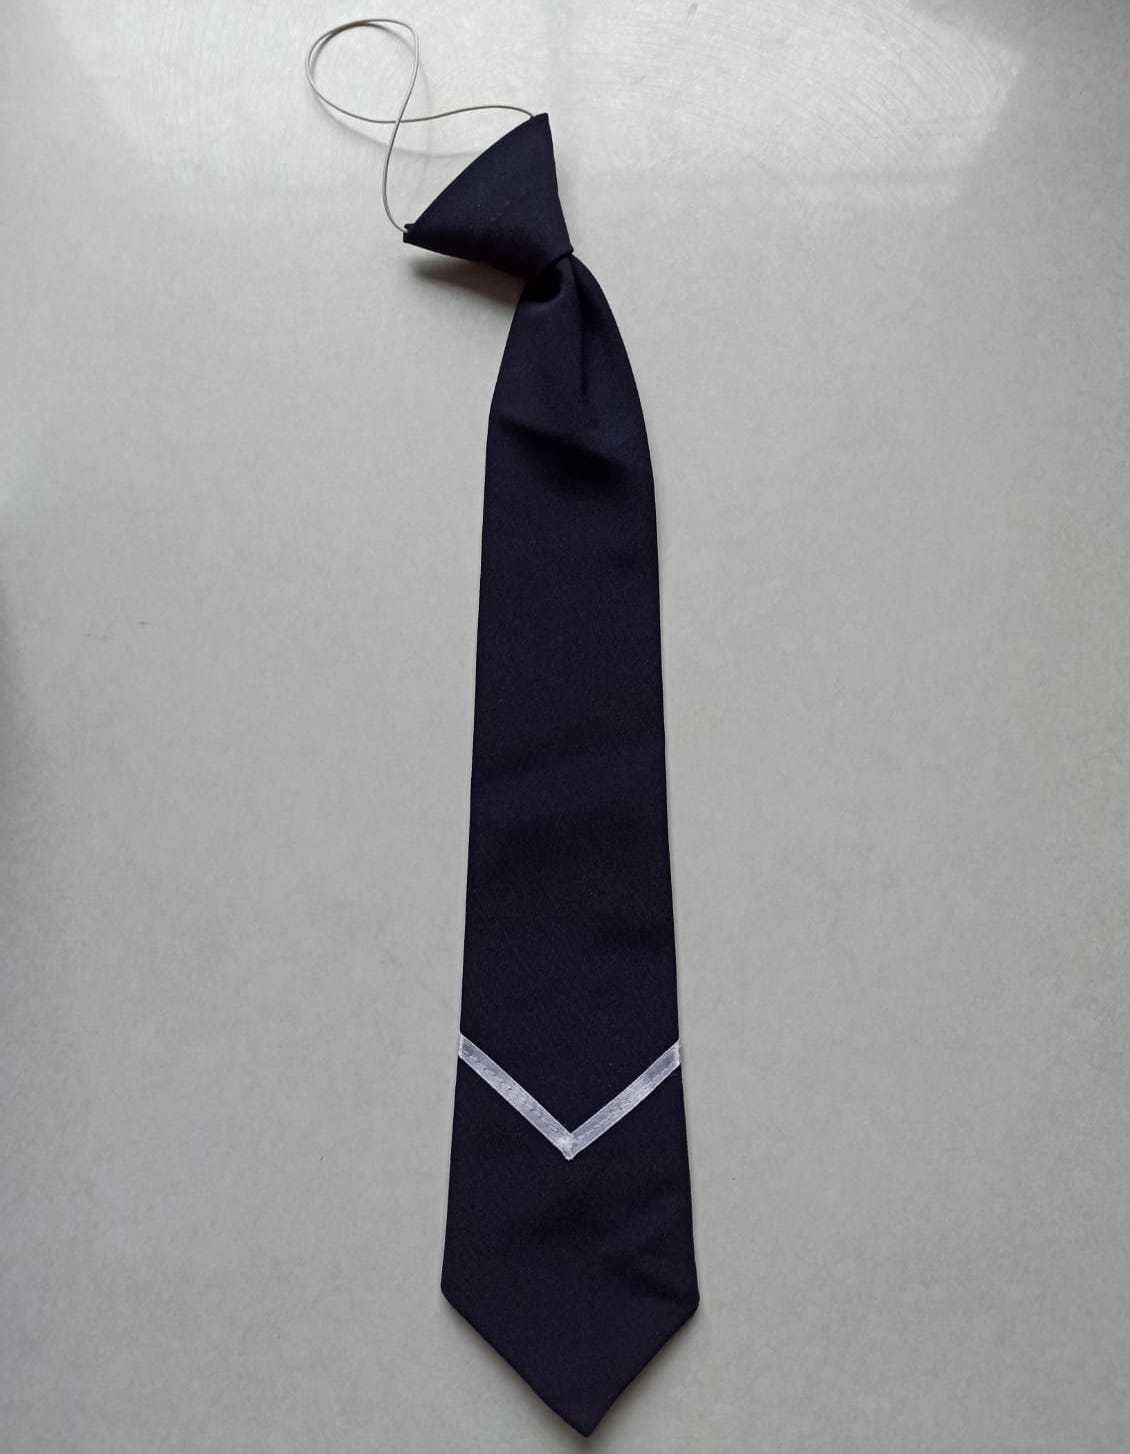 krawat marynarski na gumce